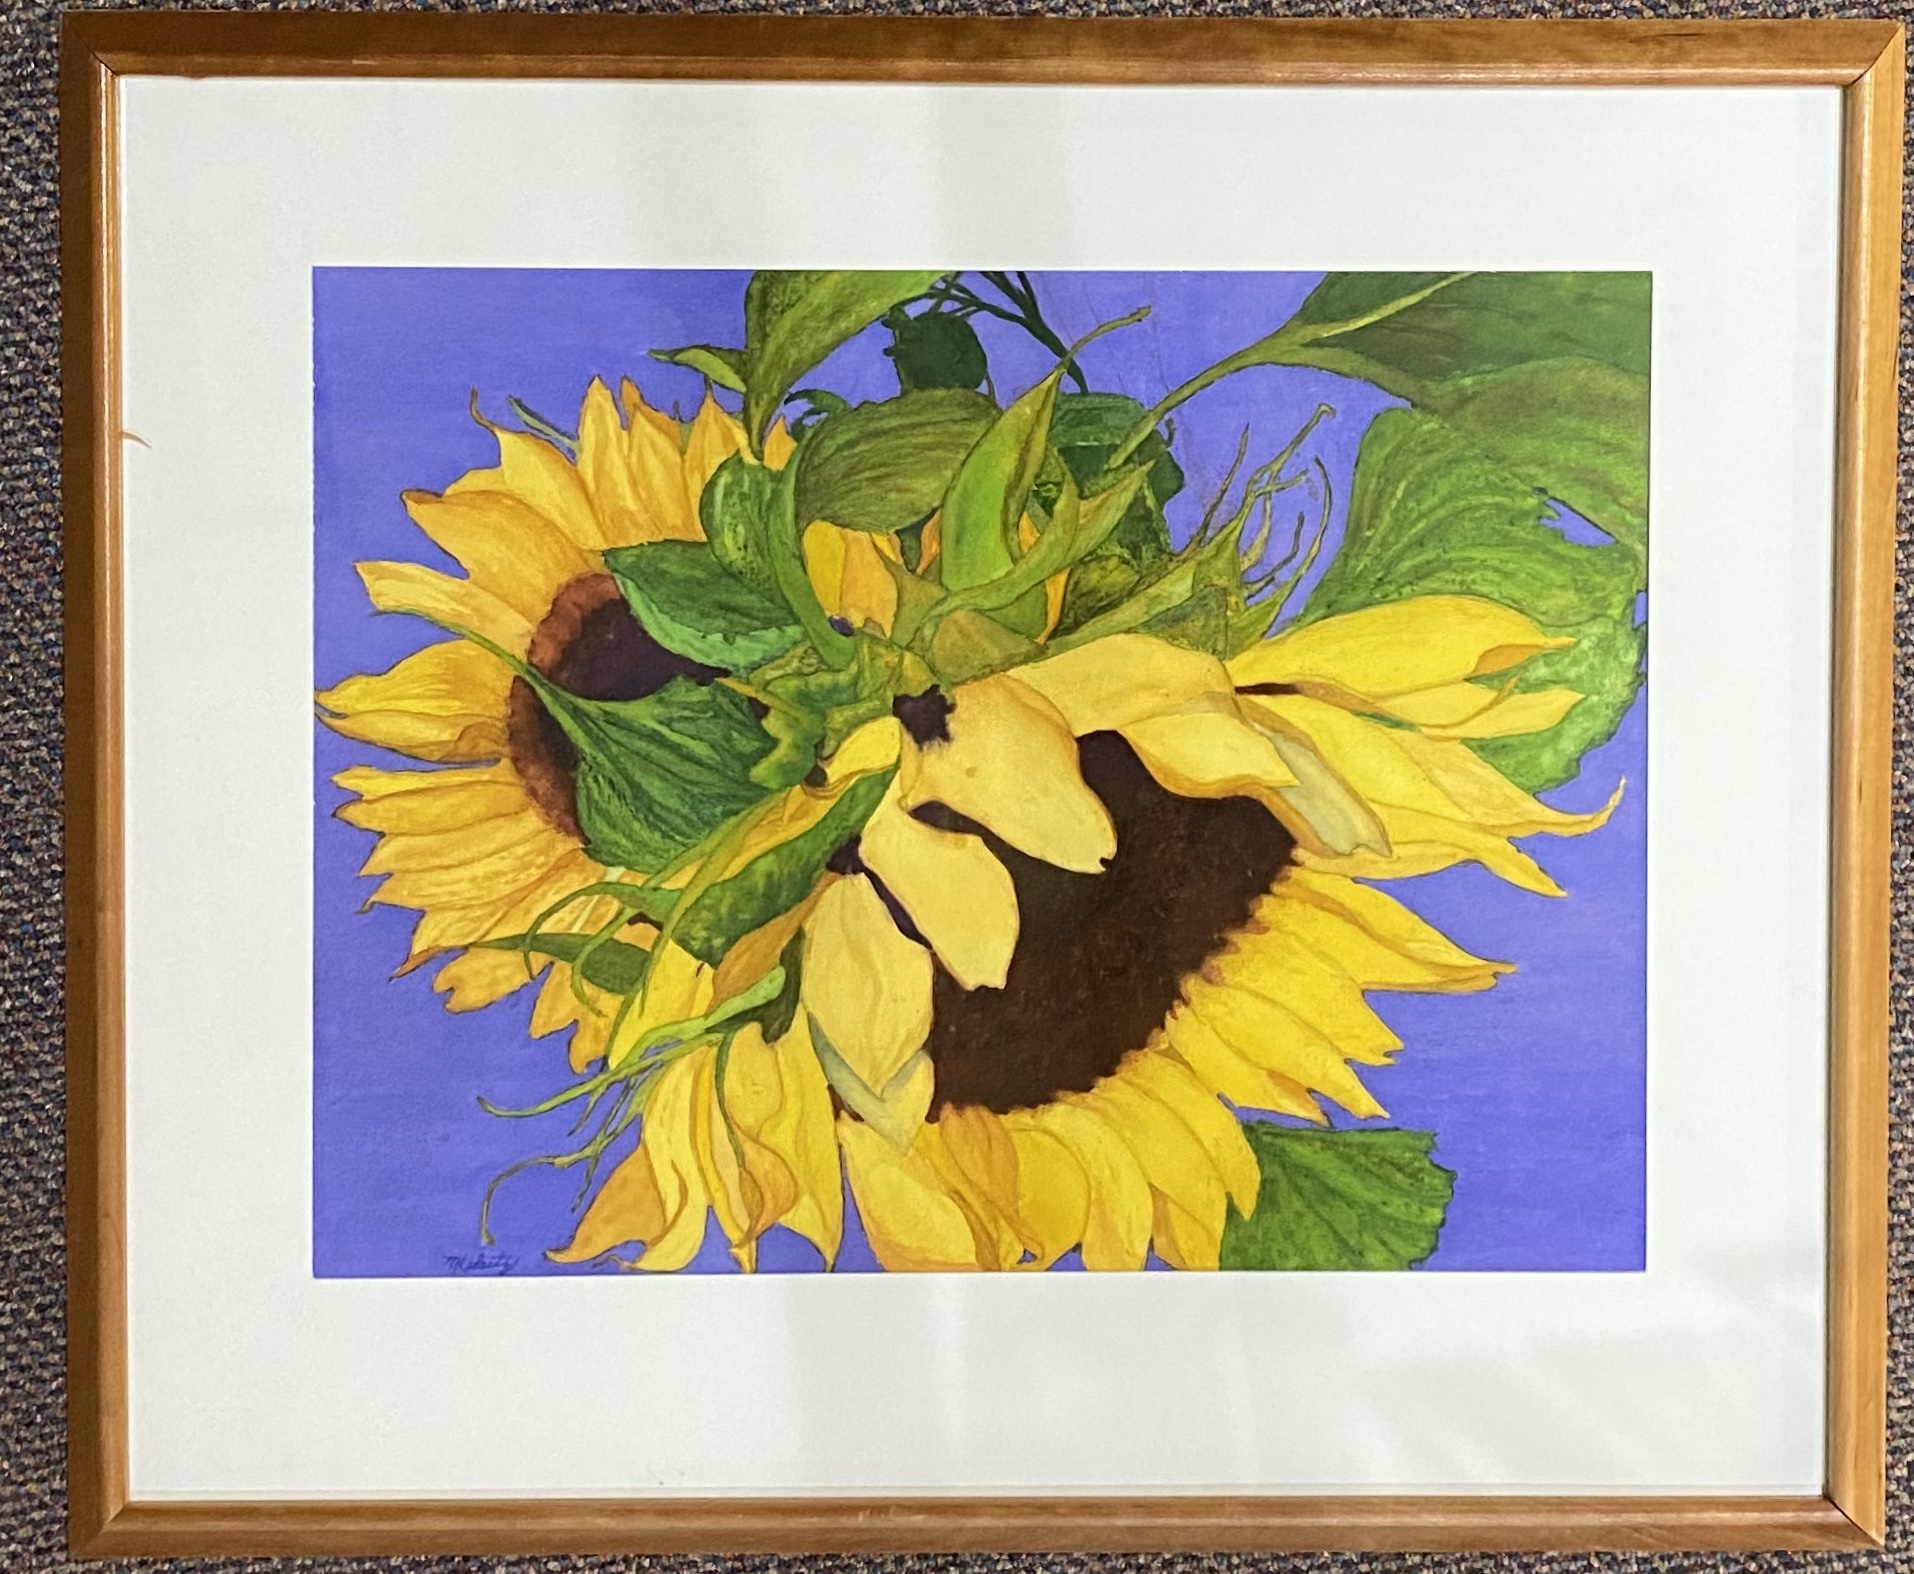 Sunflowers for Ukraine
Giclee
$150









